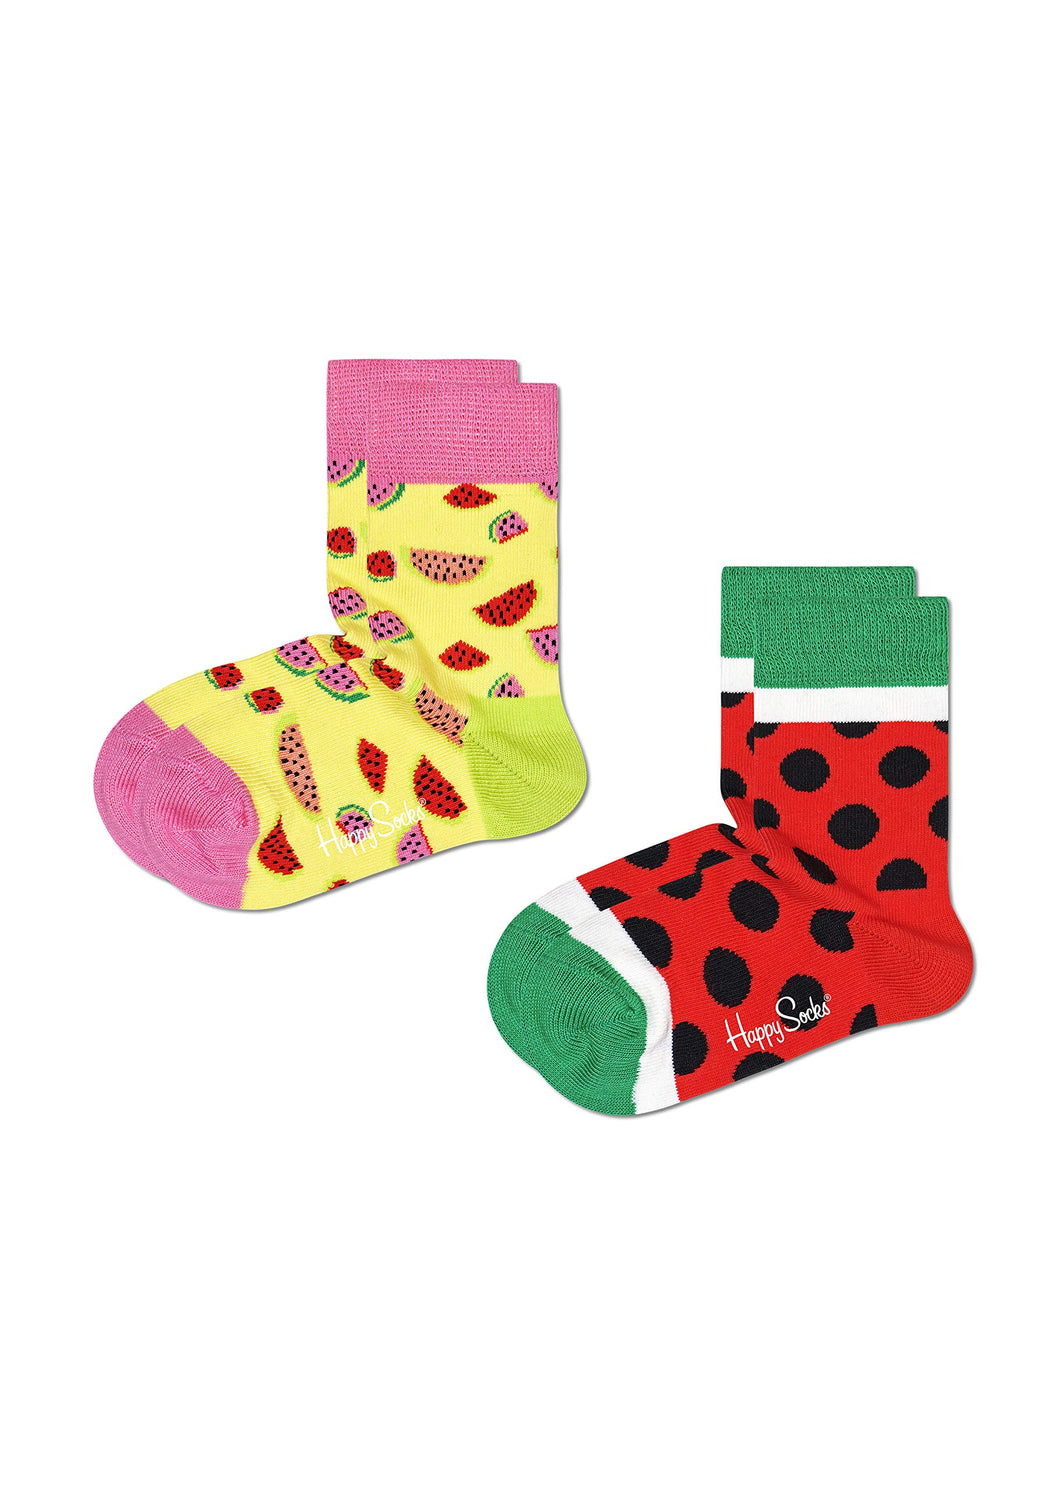 Happy Socks Calzini Unisex-Bambini e Ragazzi